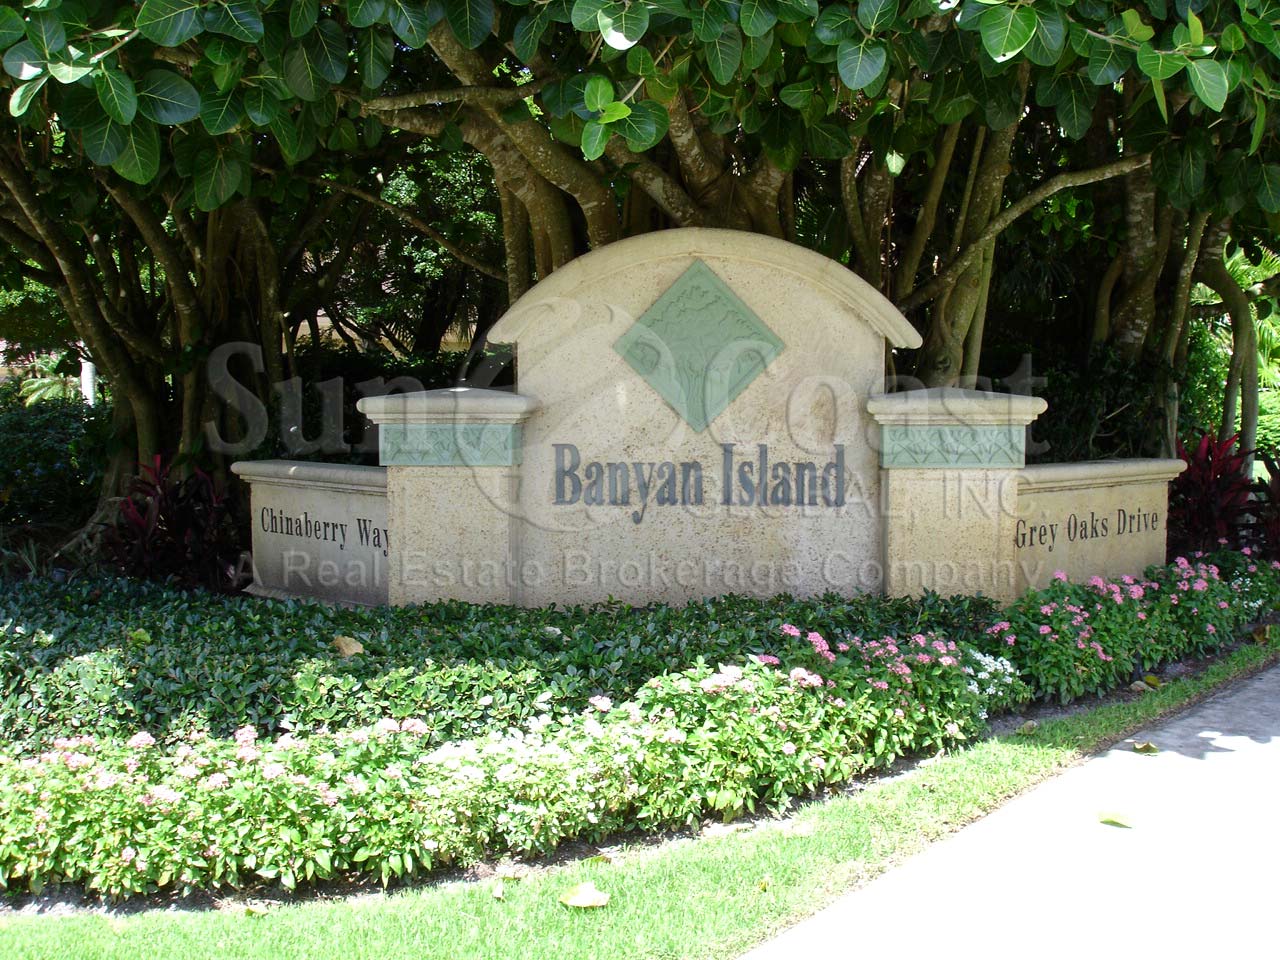 Banyan Island signage